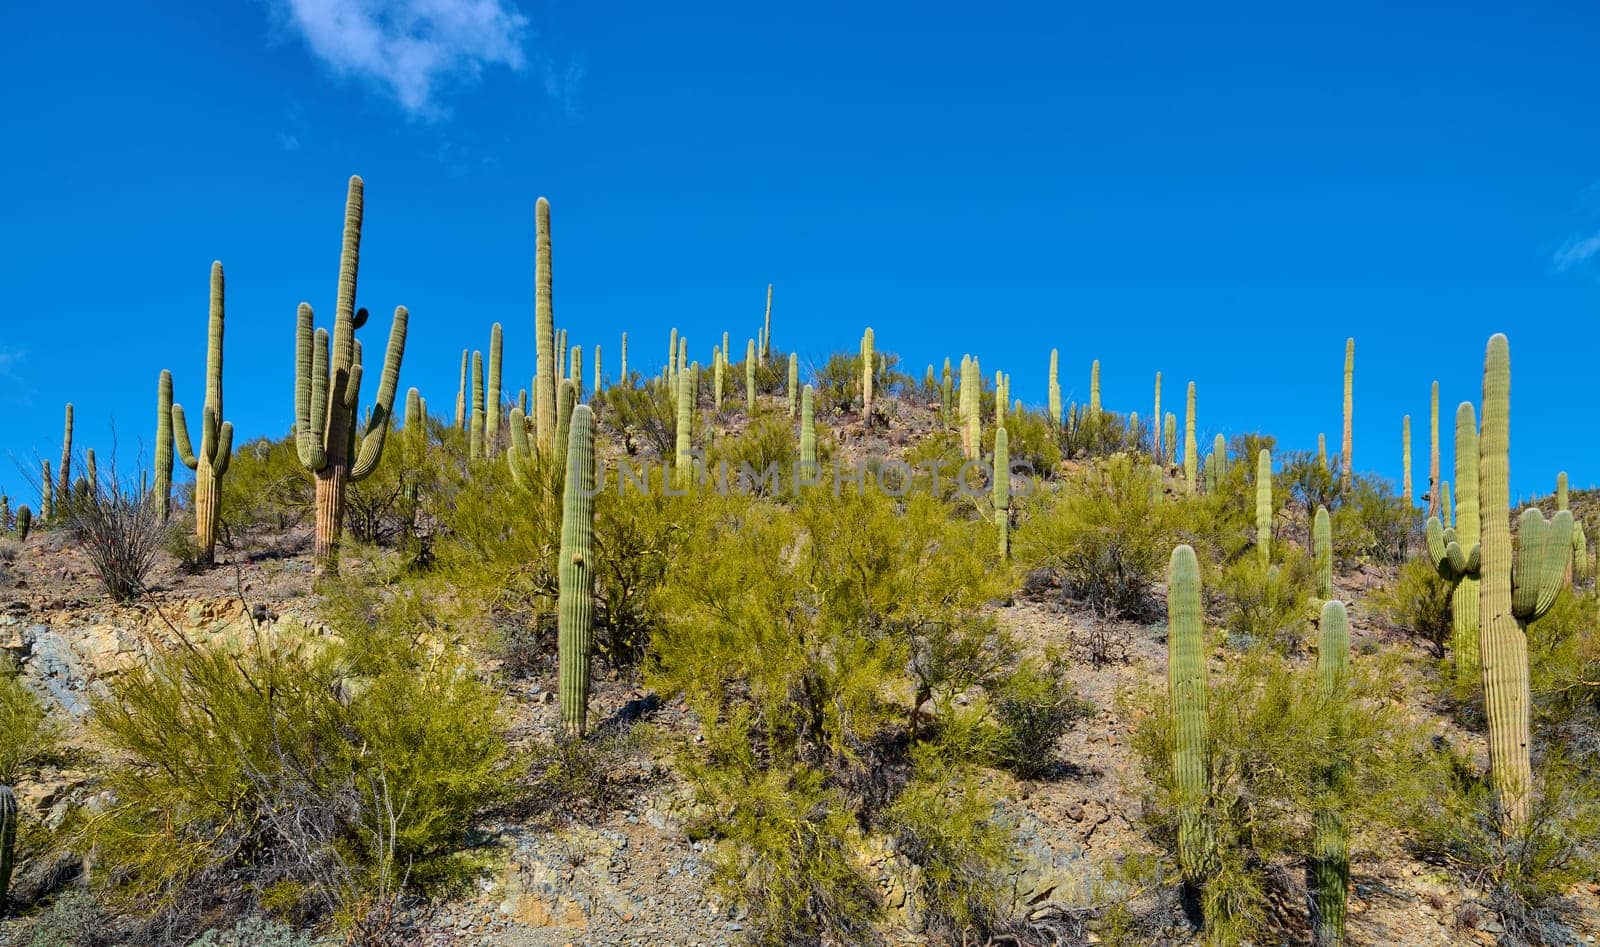 Saguaro cactues growing along King Canyon Wash in Saguaro National Park, Tucson Arizona. by patrickstock